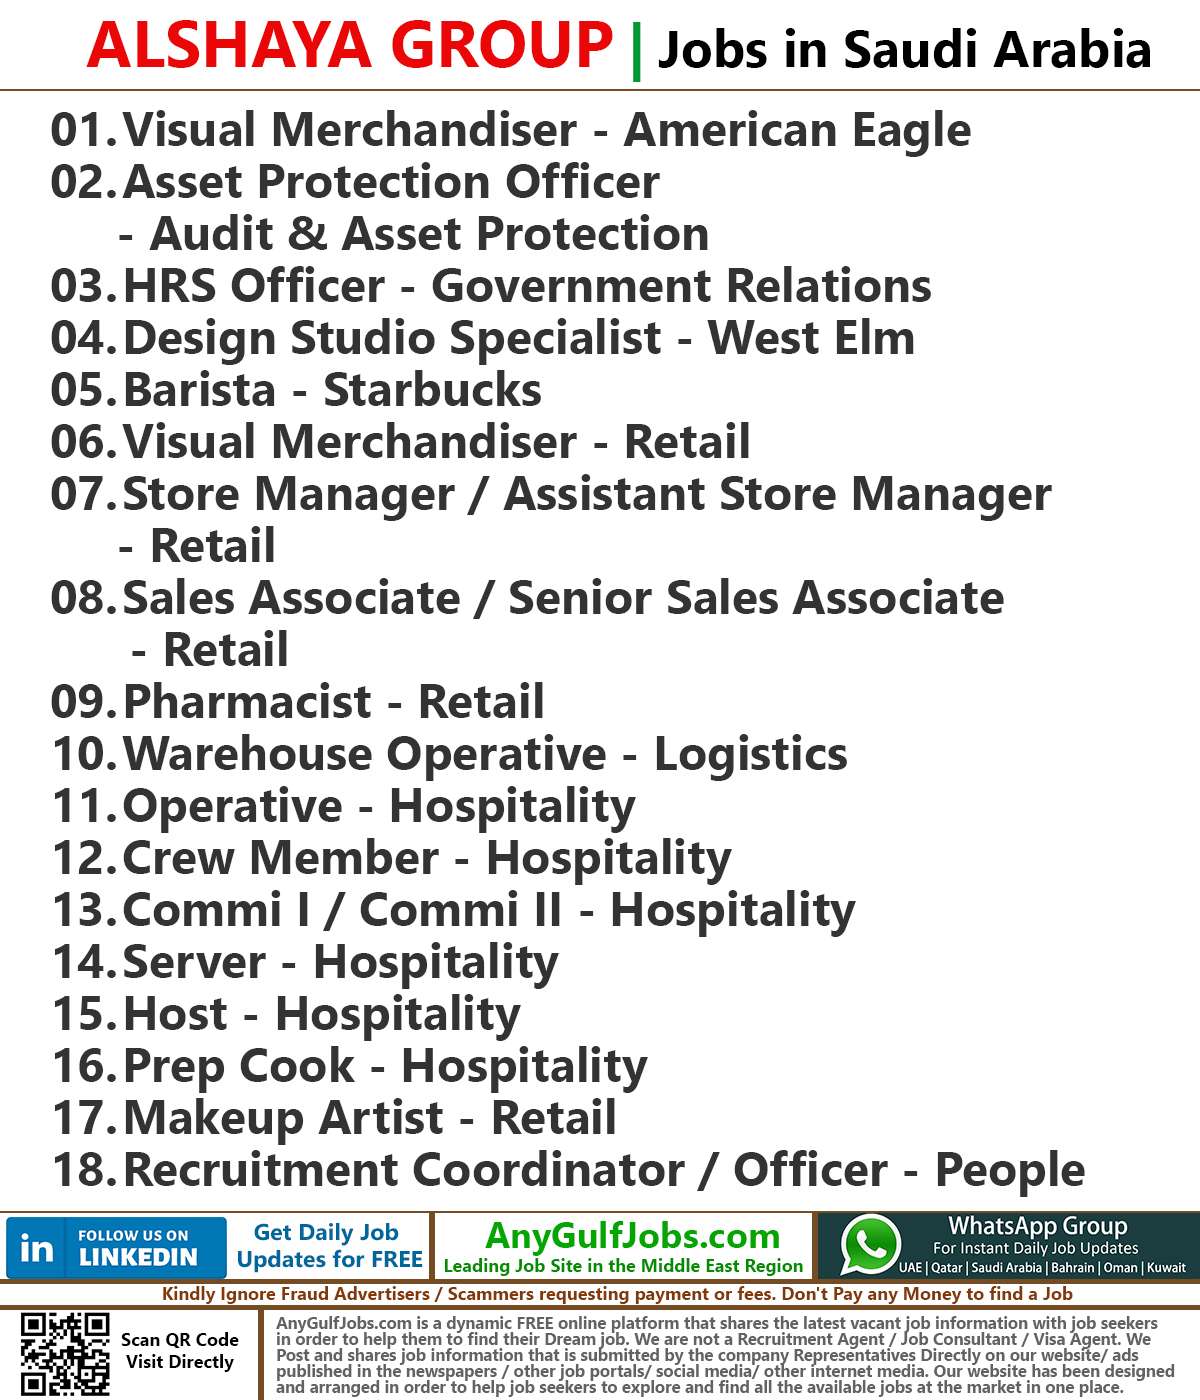 Alshaya Group Job Vacancies - Kingdom of Saudi Arabia (KSA)